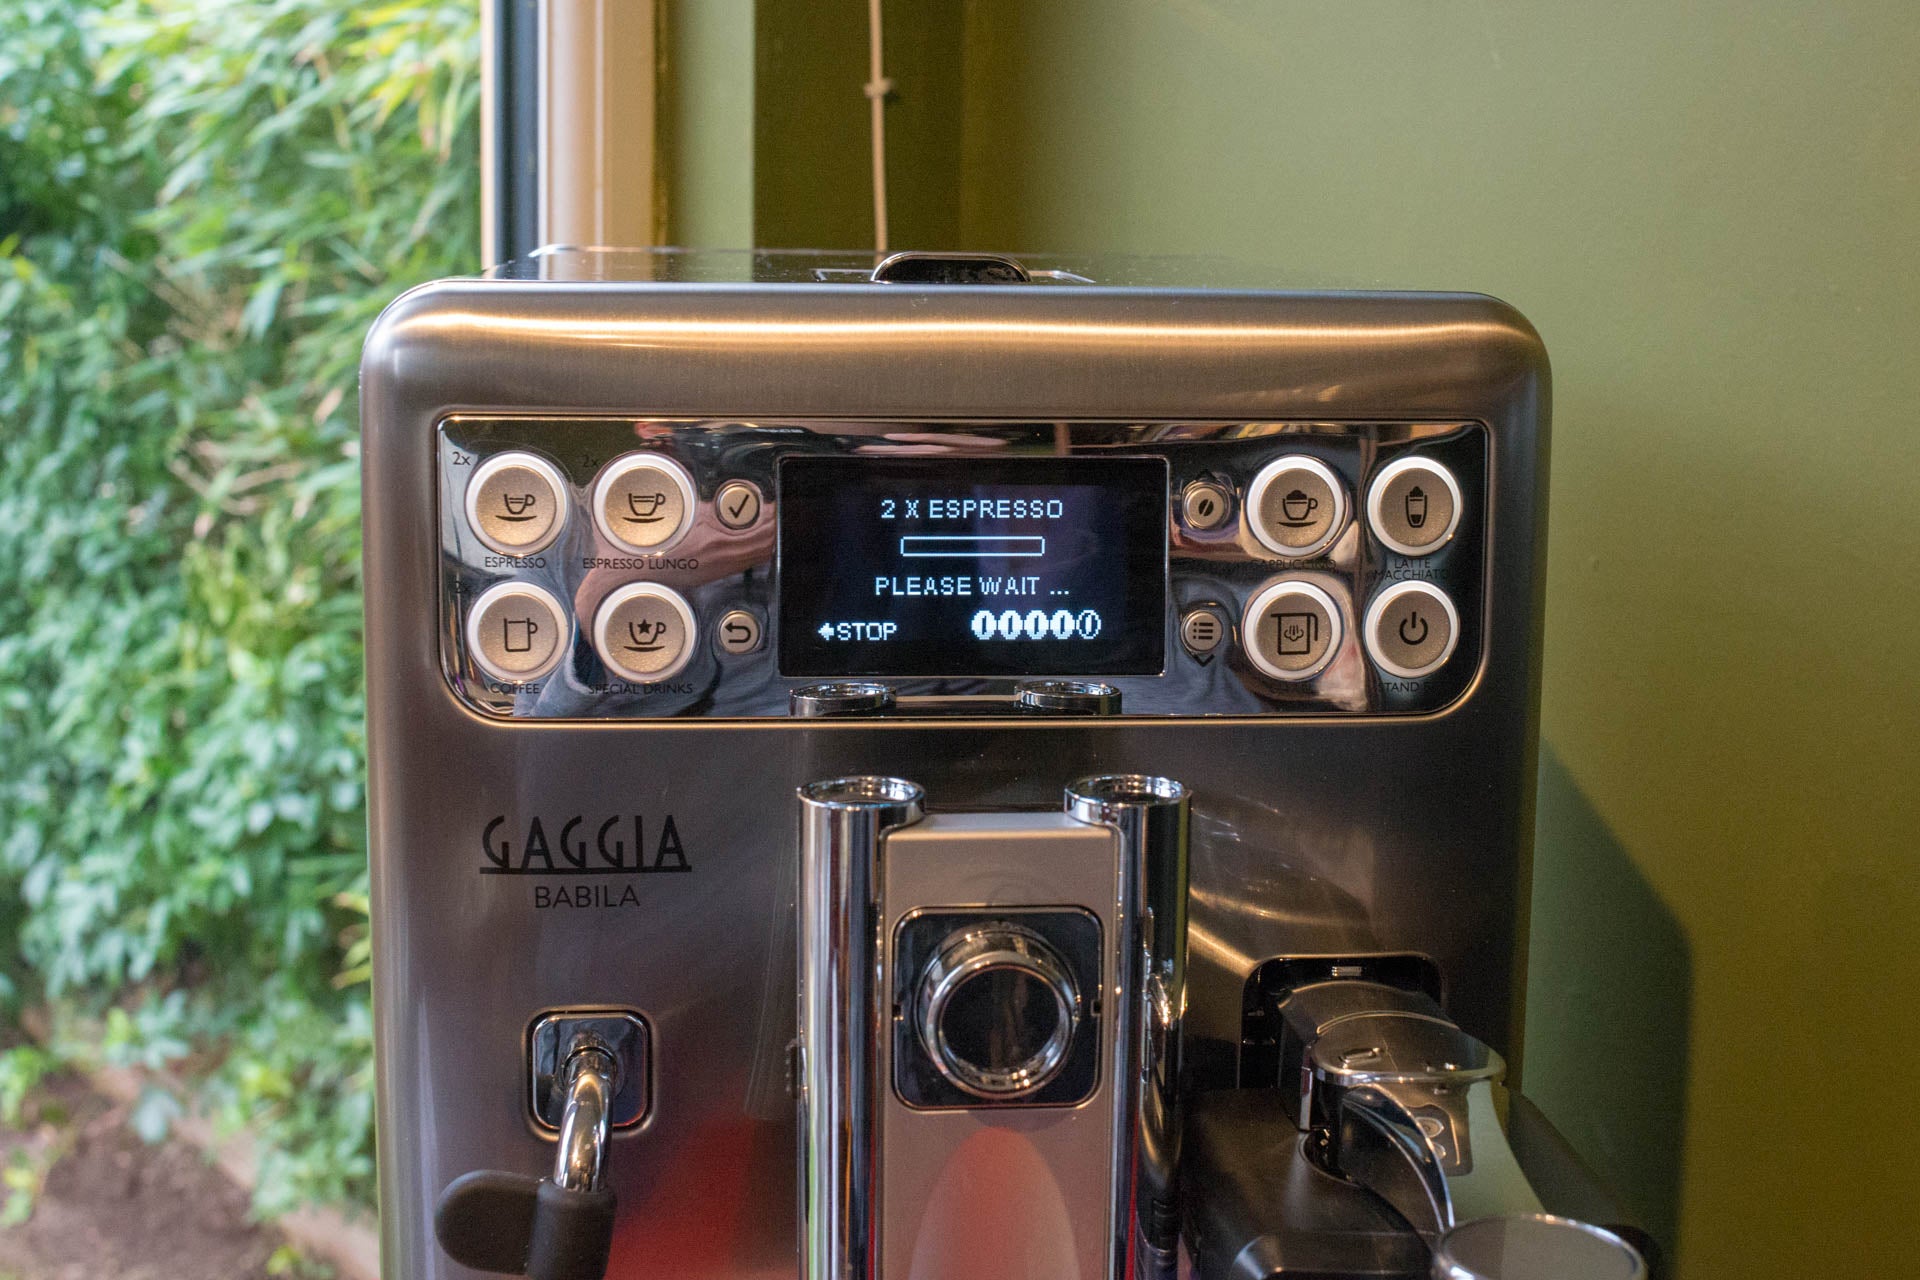 Gaggia Babila espresso machine with display screen and buttons.